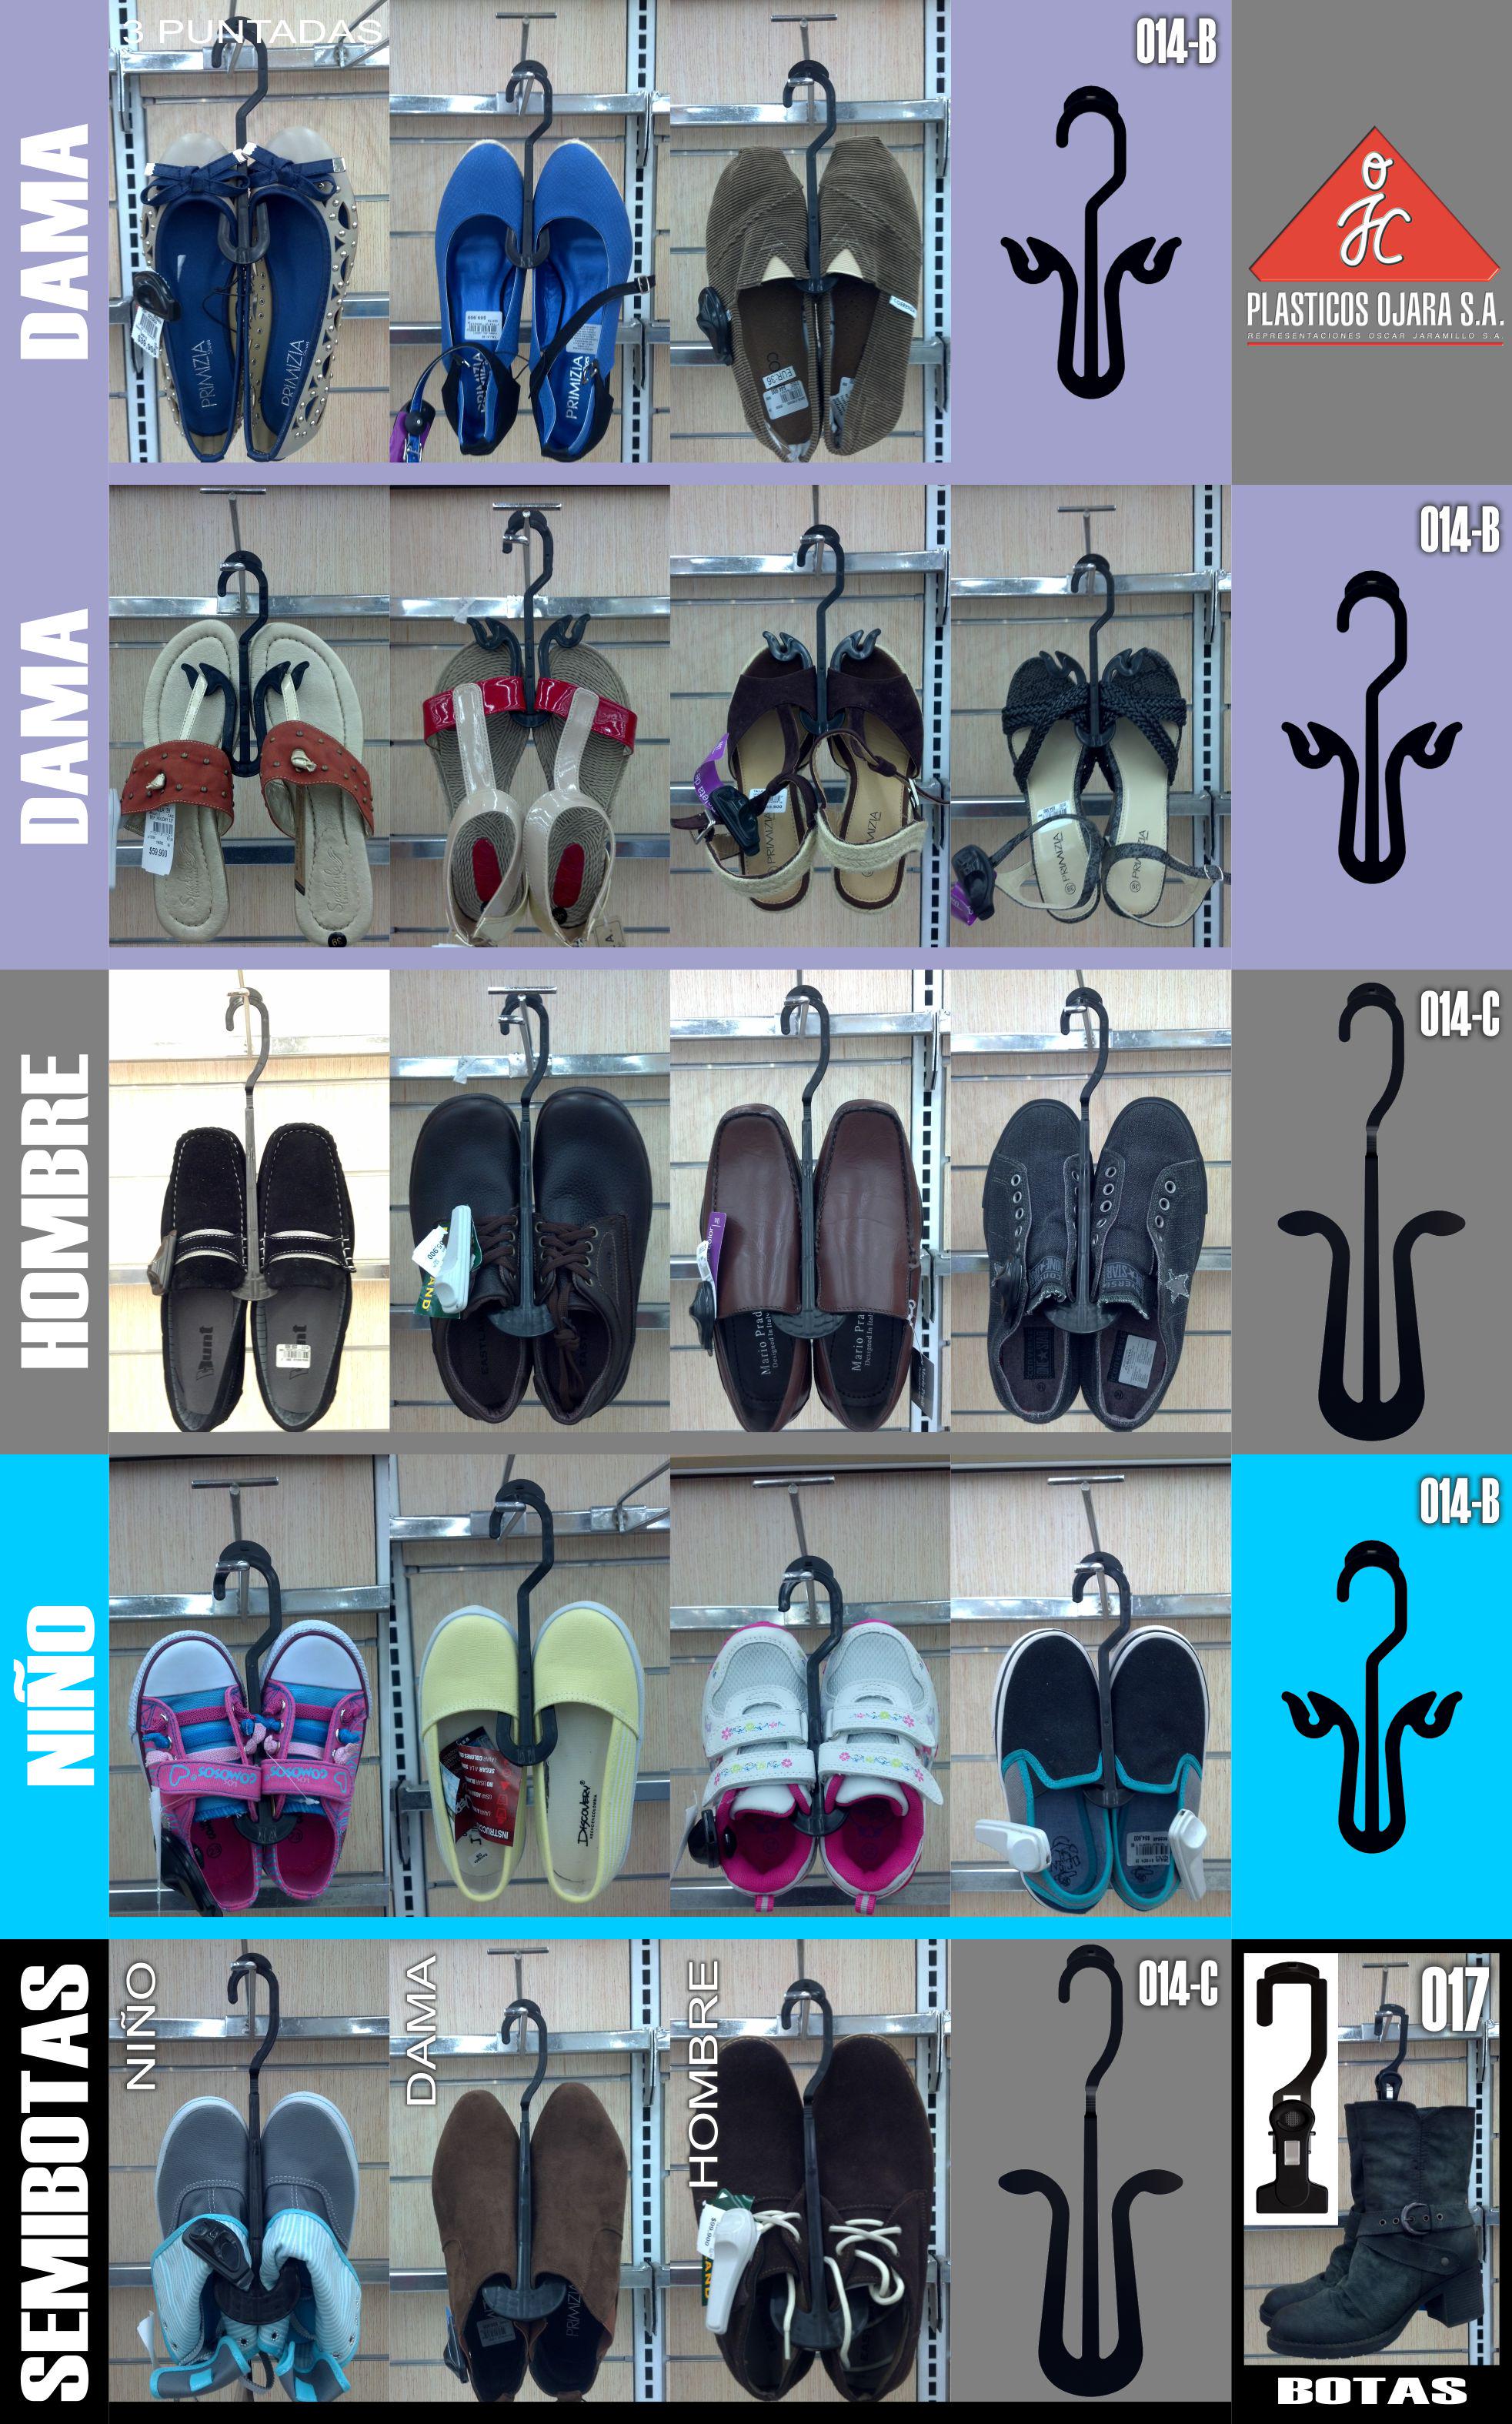 Plasticos Ojara on X: "Exhibición de zapatos http://t.co/17850bfhyz" / X